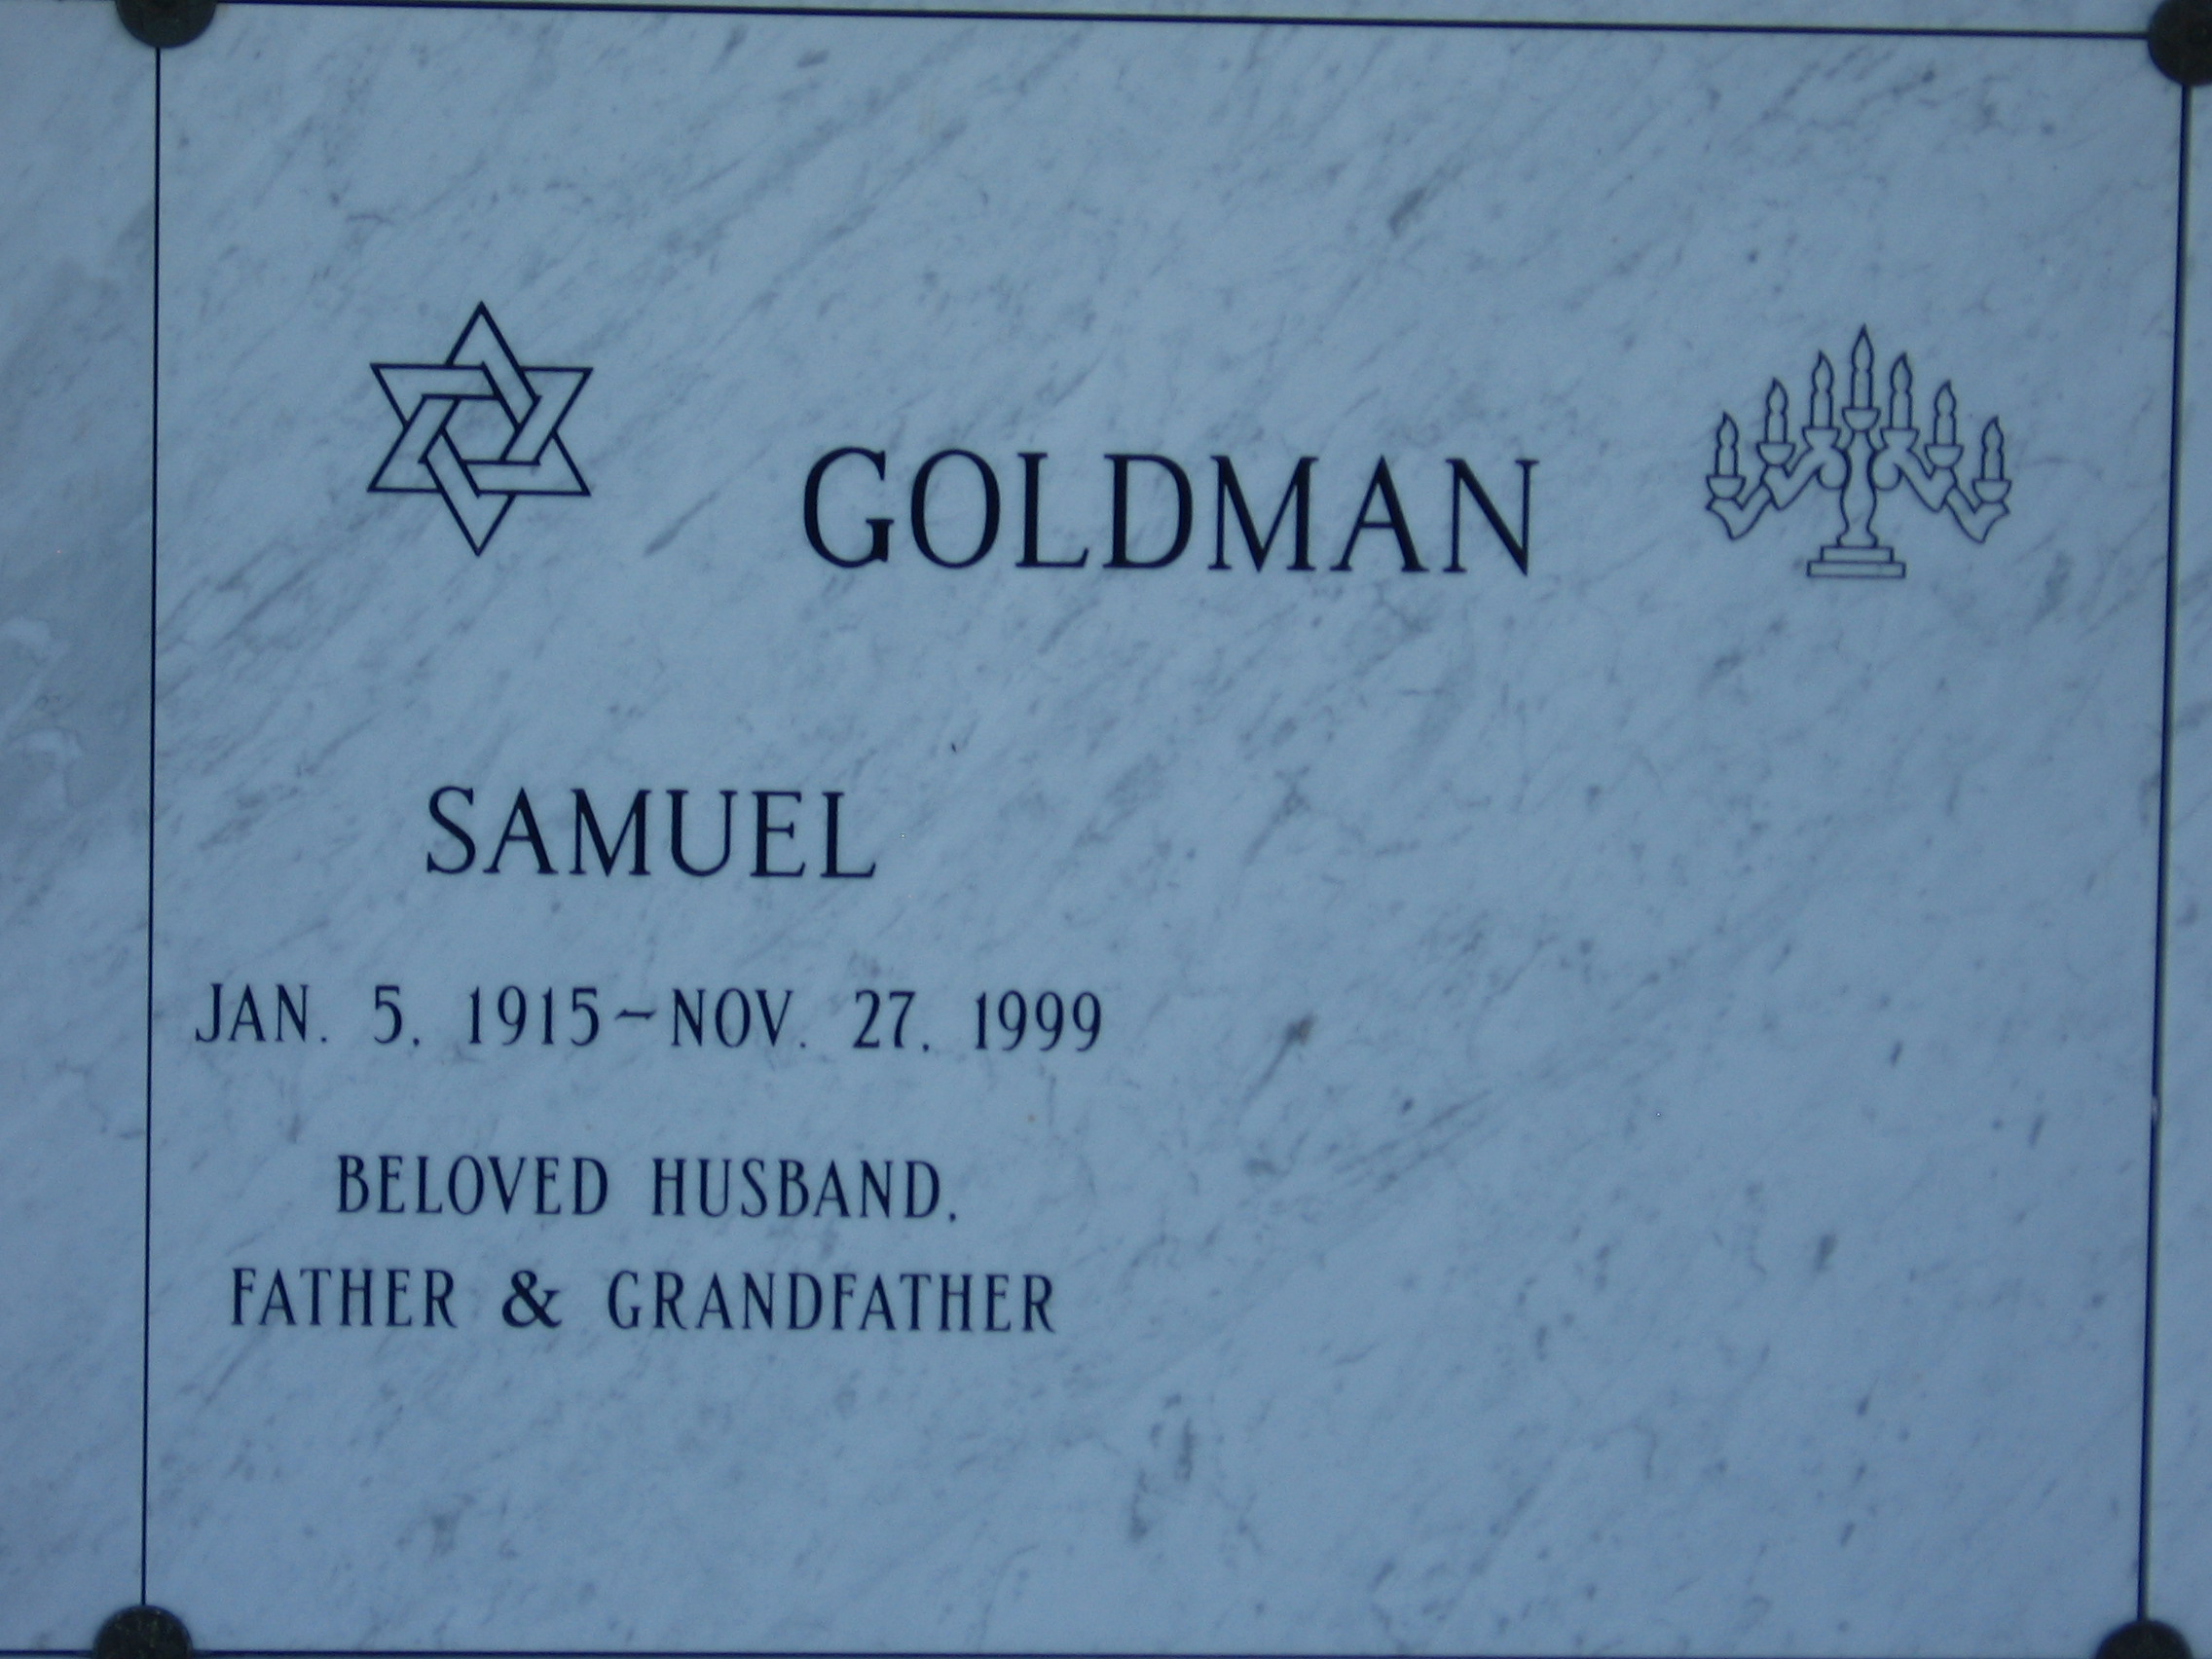 Samuel Goldman